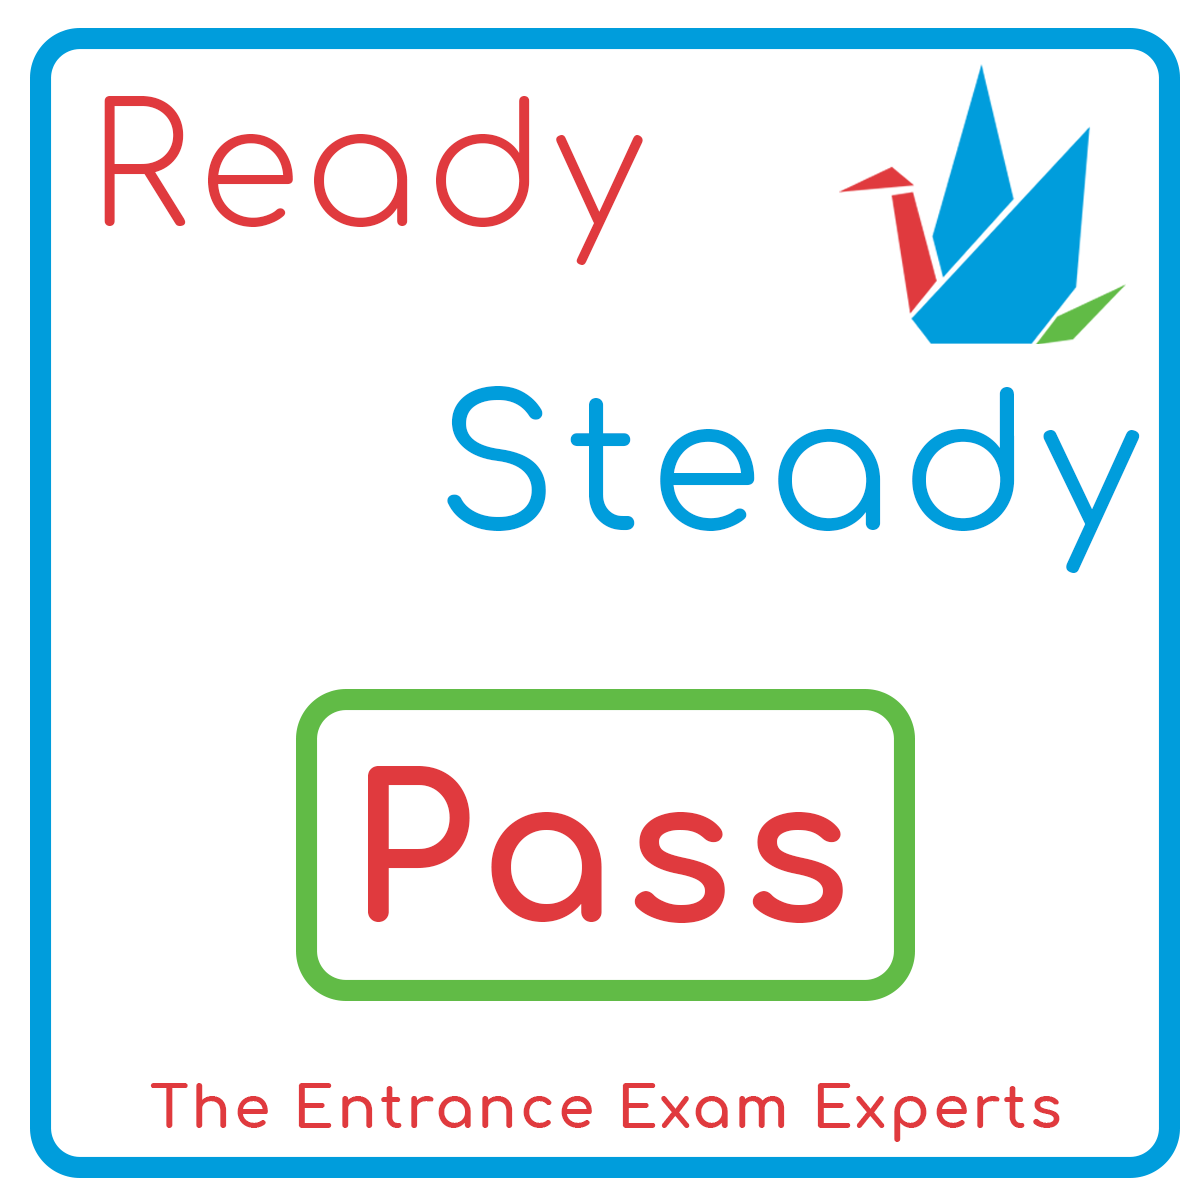 Ready Steady Pass